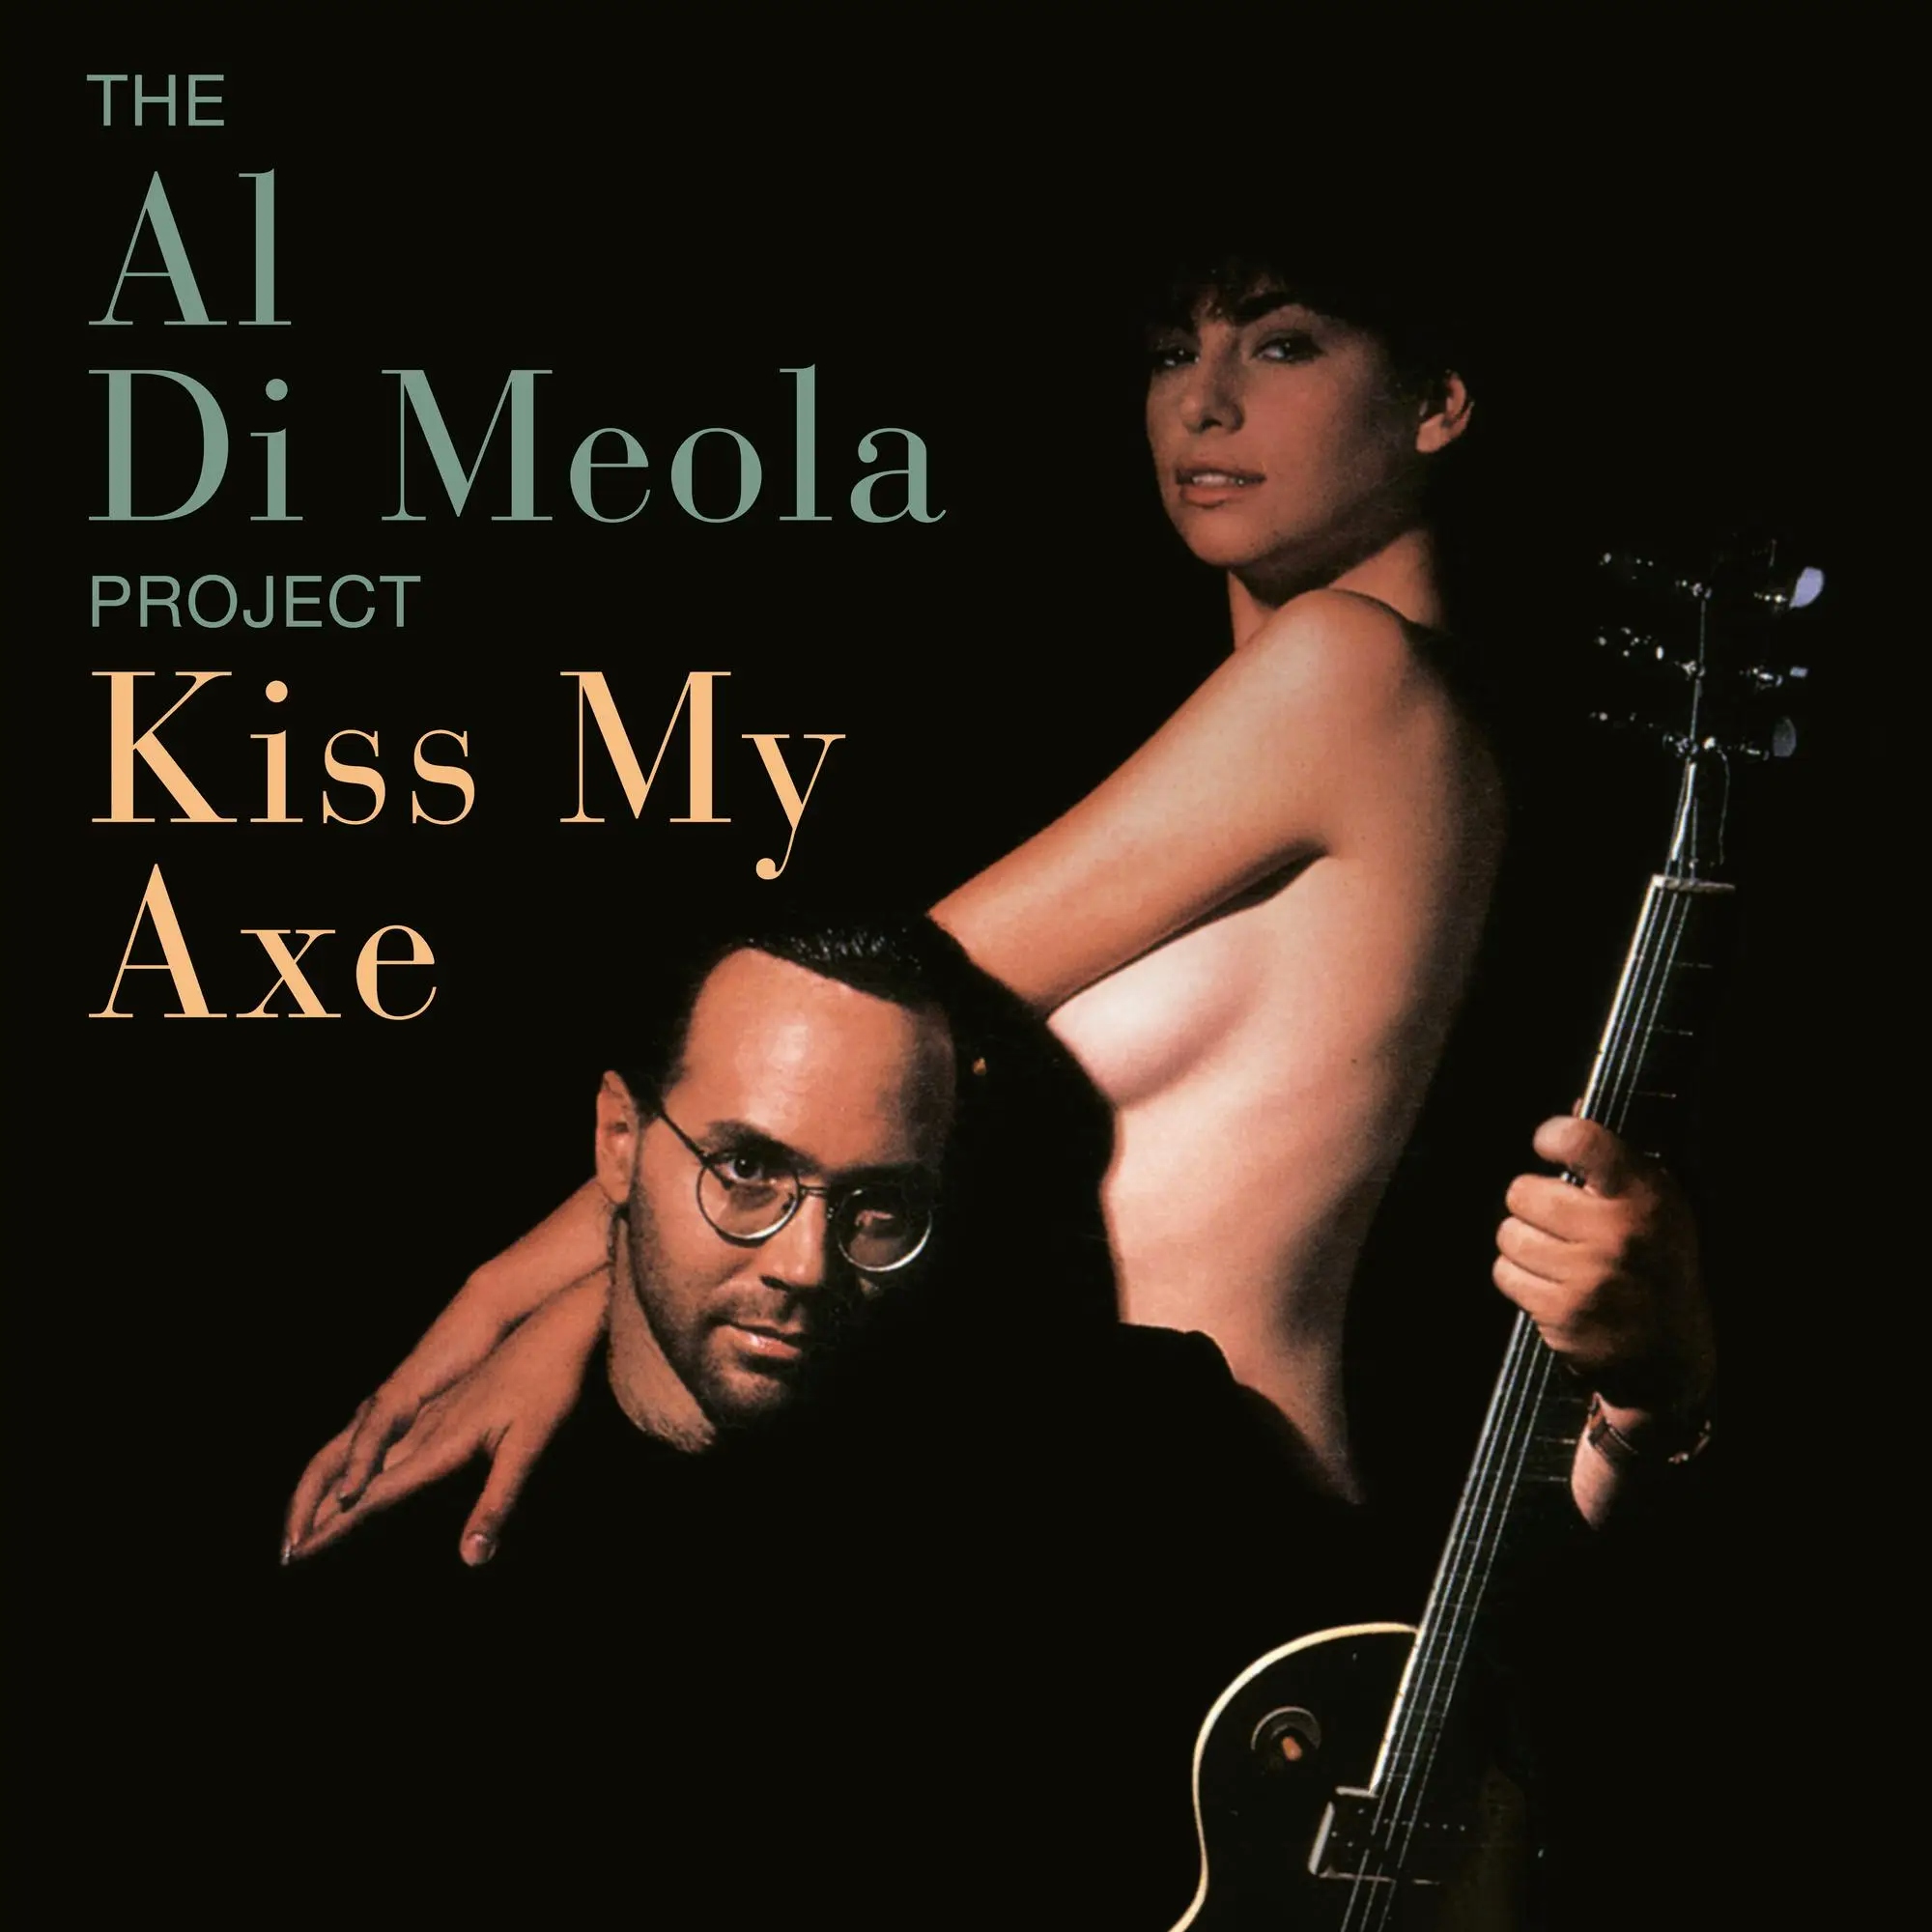 Album artwork for Kiss My Axe by Al Di Meola